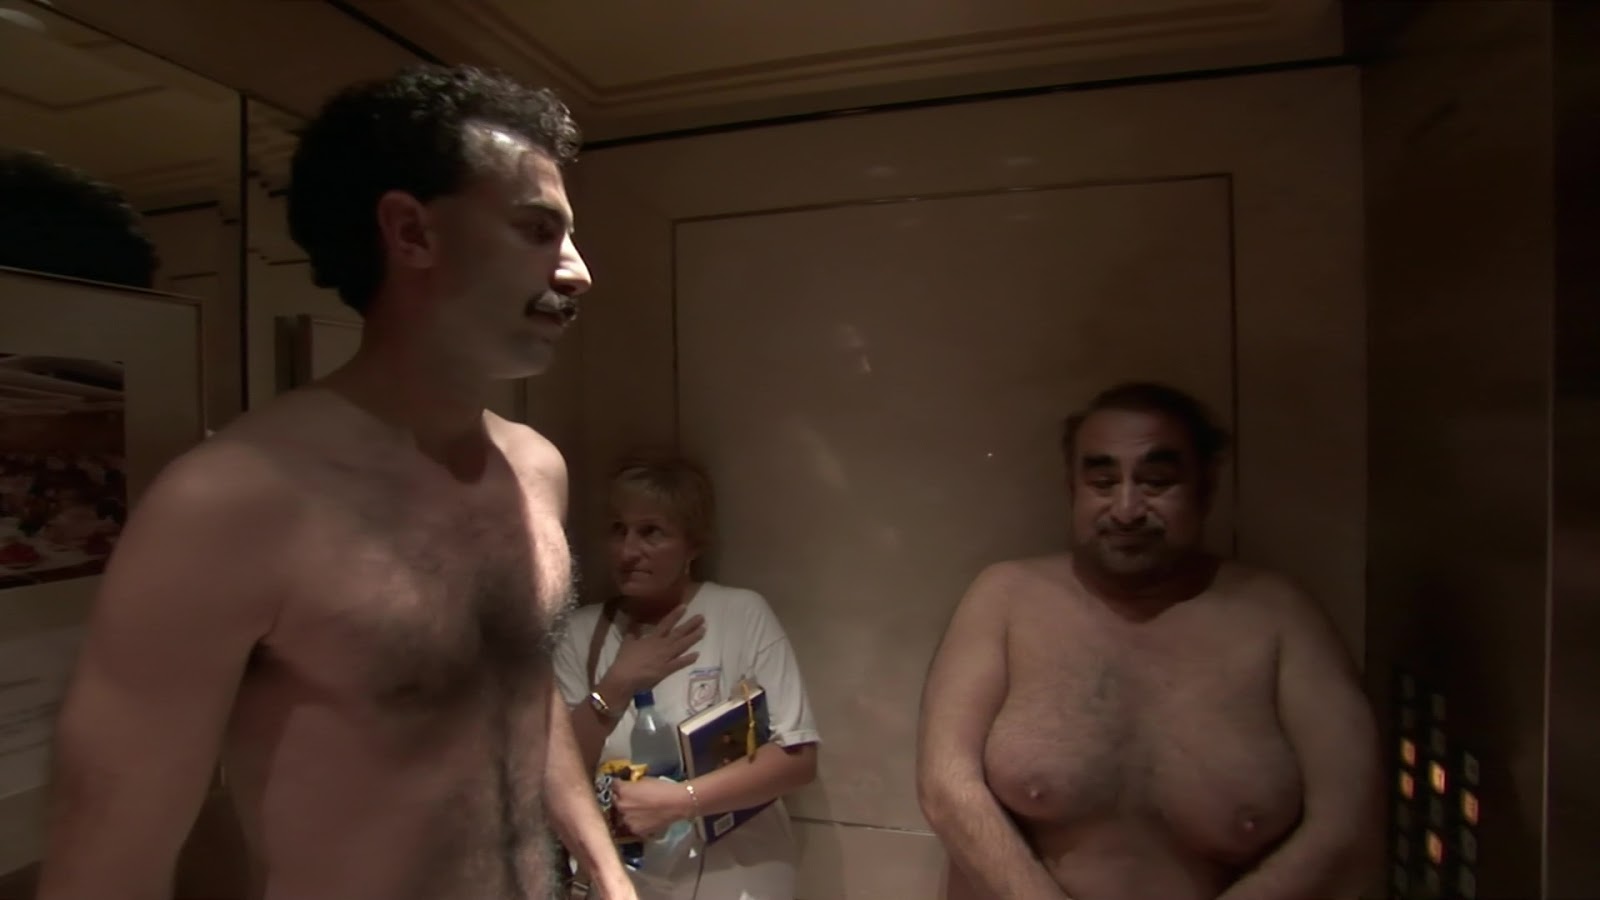 Sacha Baron Cohen and Ken Davitian nude in Borat.